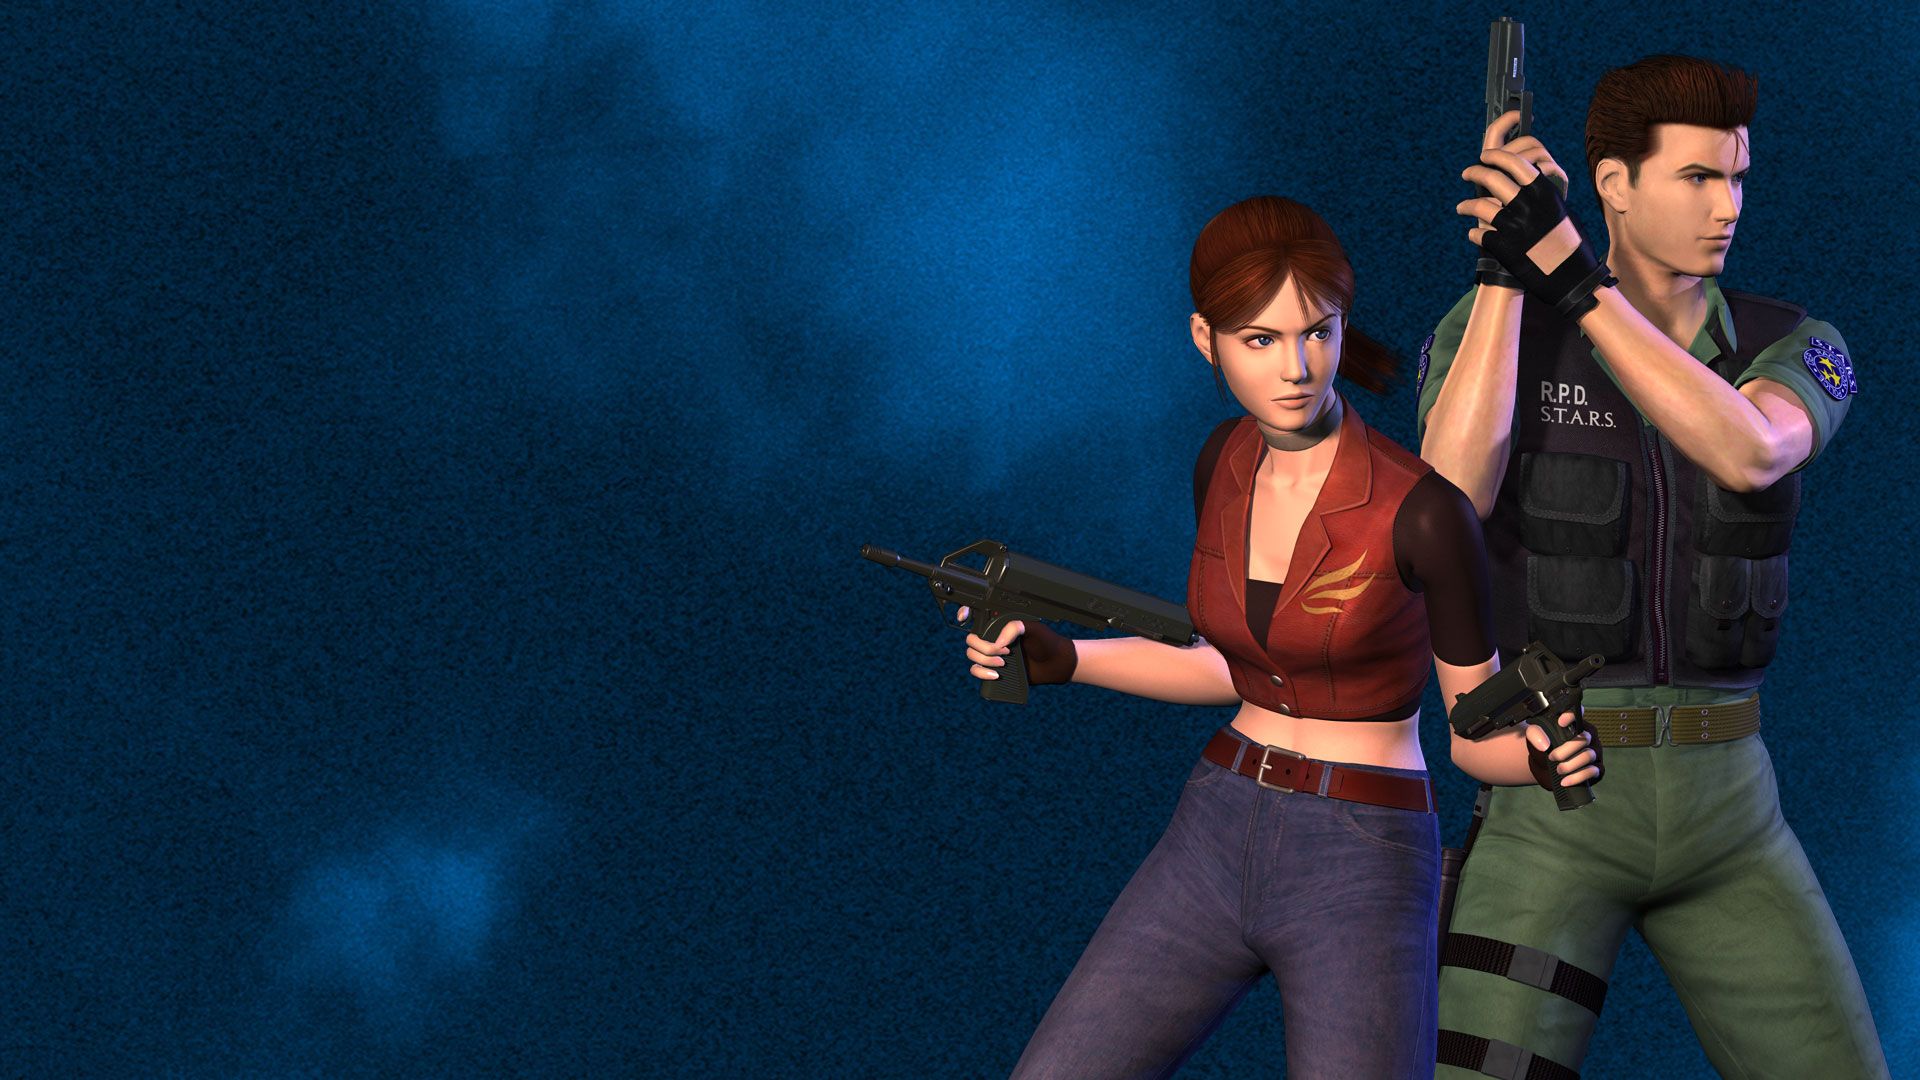 Resident Evil: Code: Veronica X